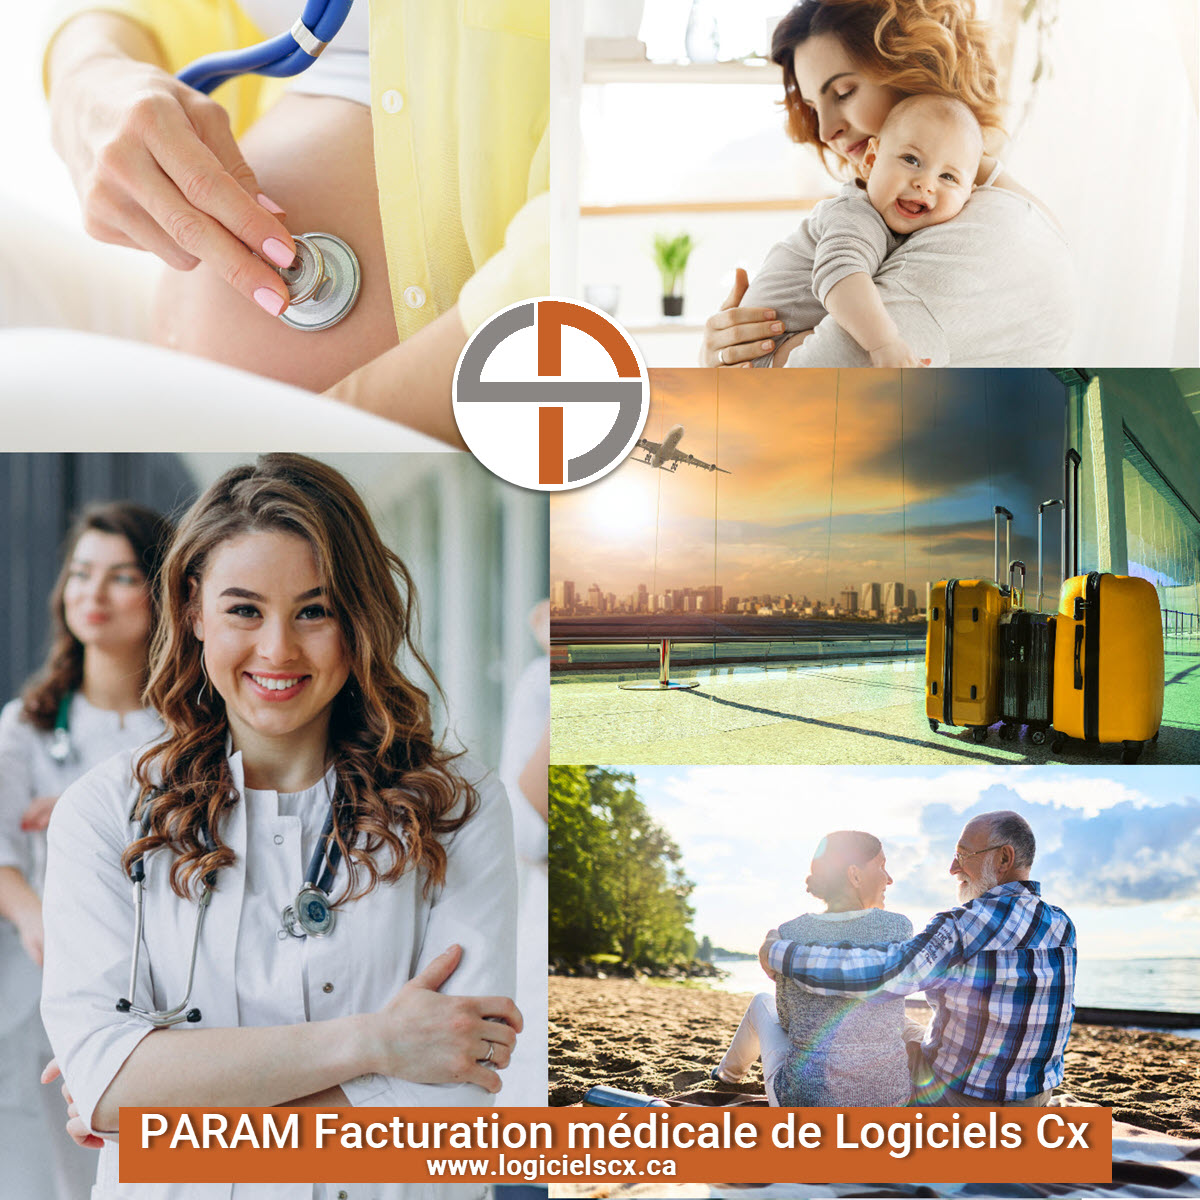 PARAM- Medical billing to the RAMQ